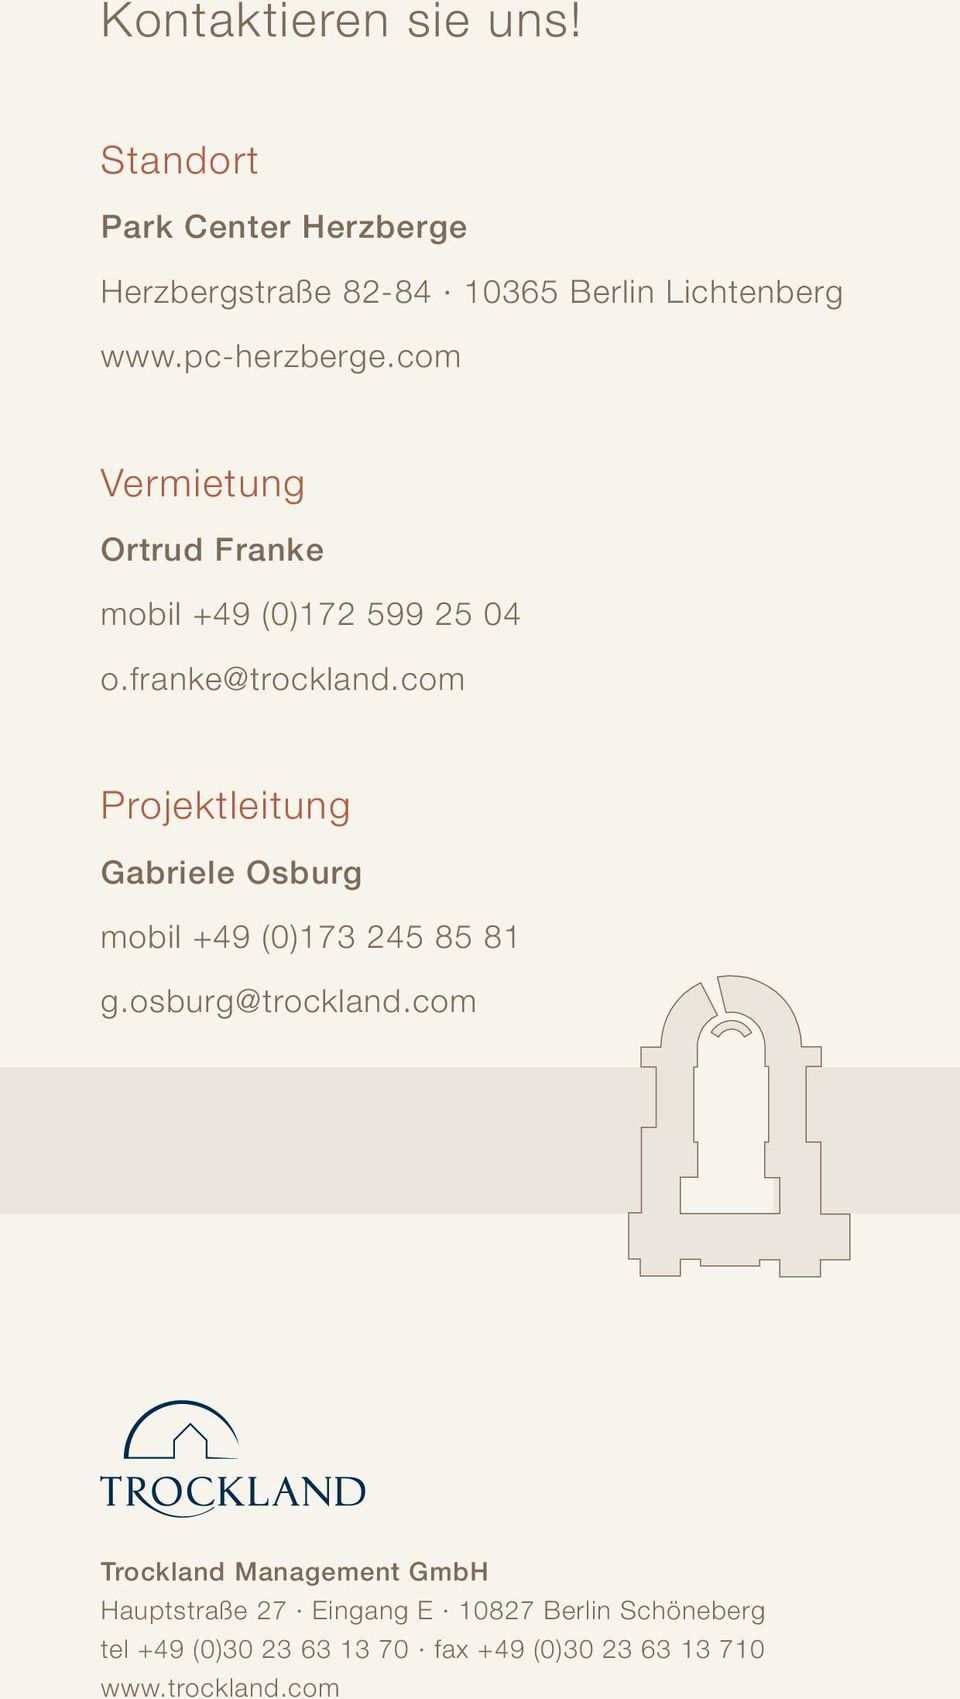 com Projektleitung Gabriele Osburg mobil +49 (0)173 245 85 81 g.osburg@trockland.